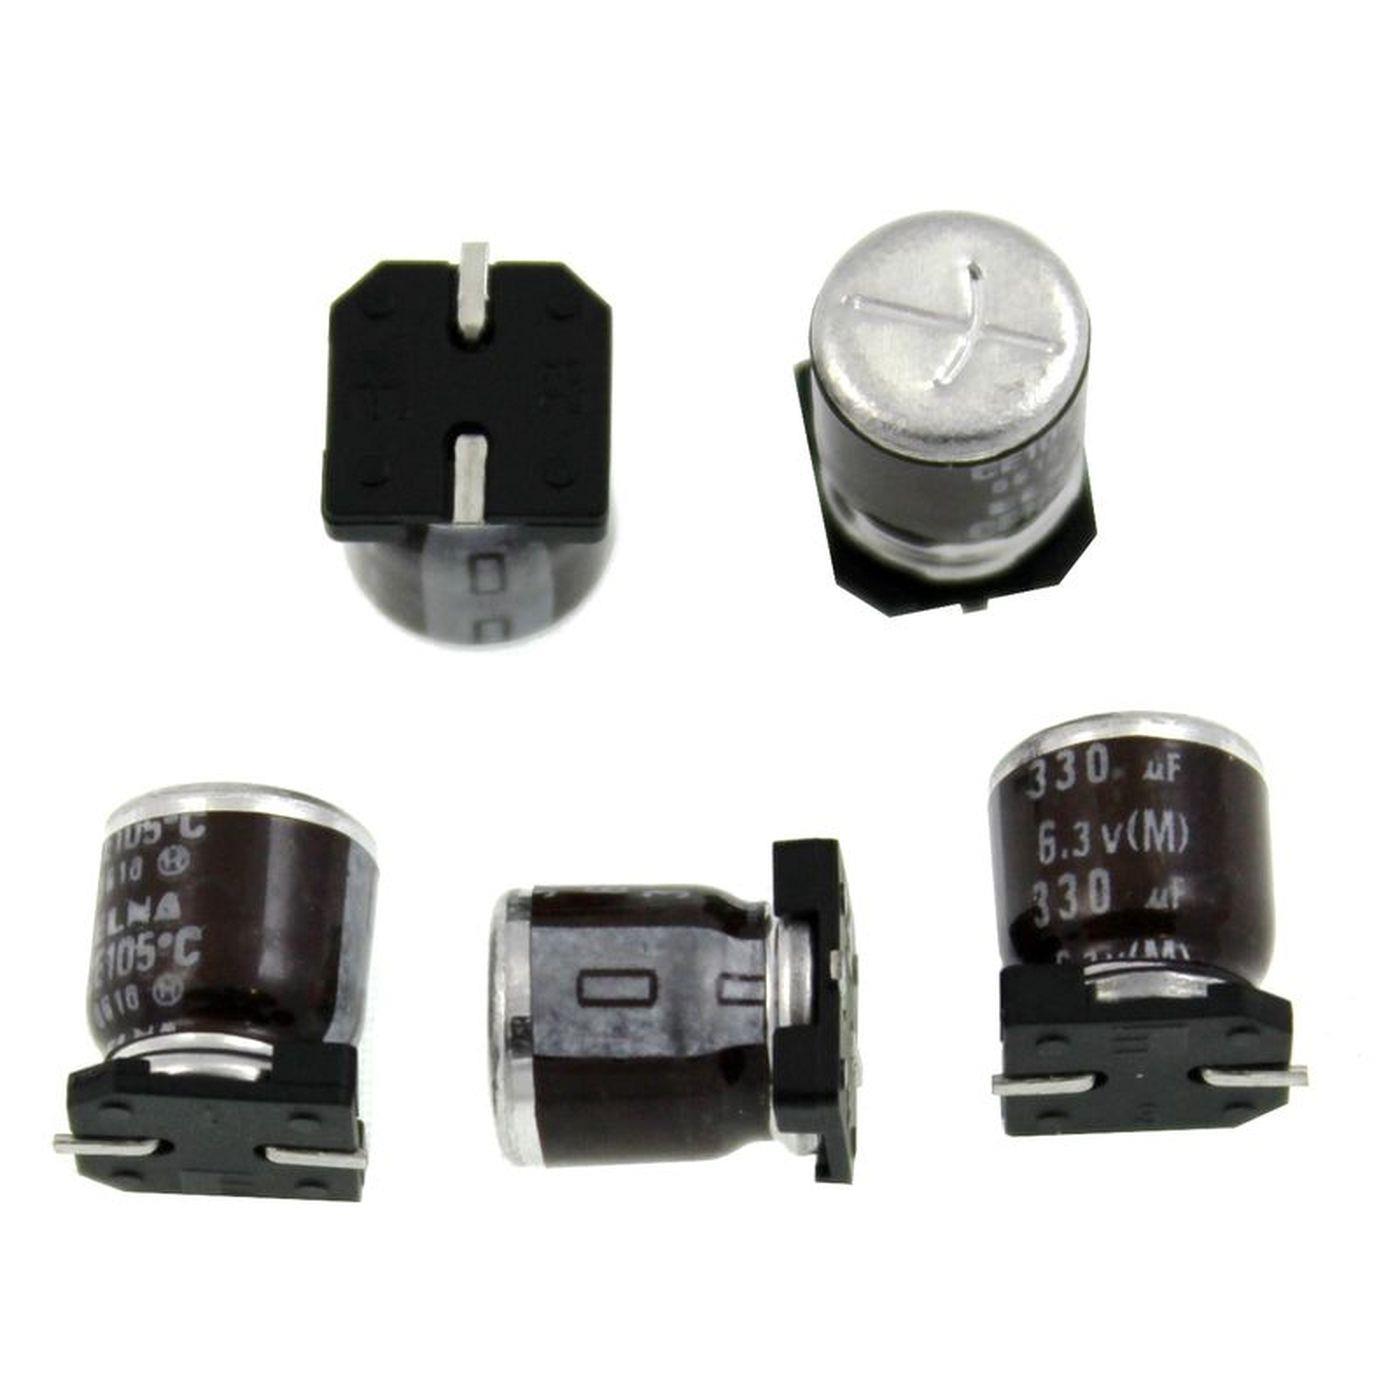 SMD Electrolytic capacitor 330µF 6,3V 105°C RVH-6V331MG10U-R d8x10mm 330uF